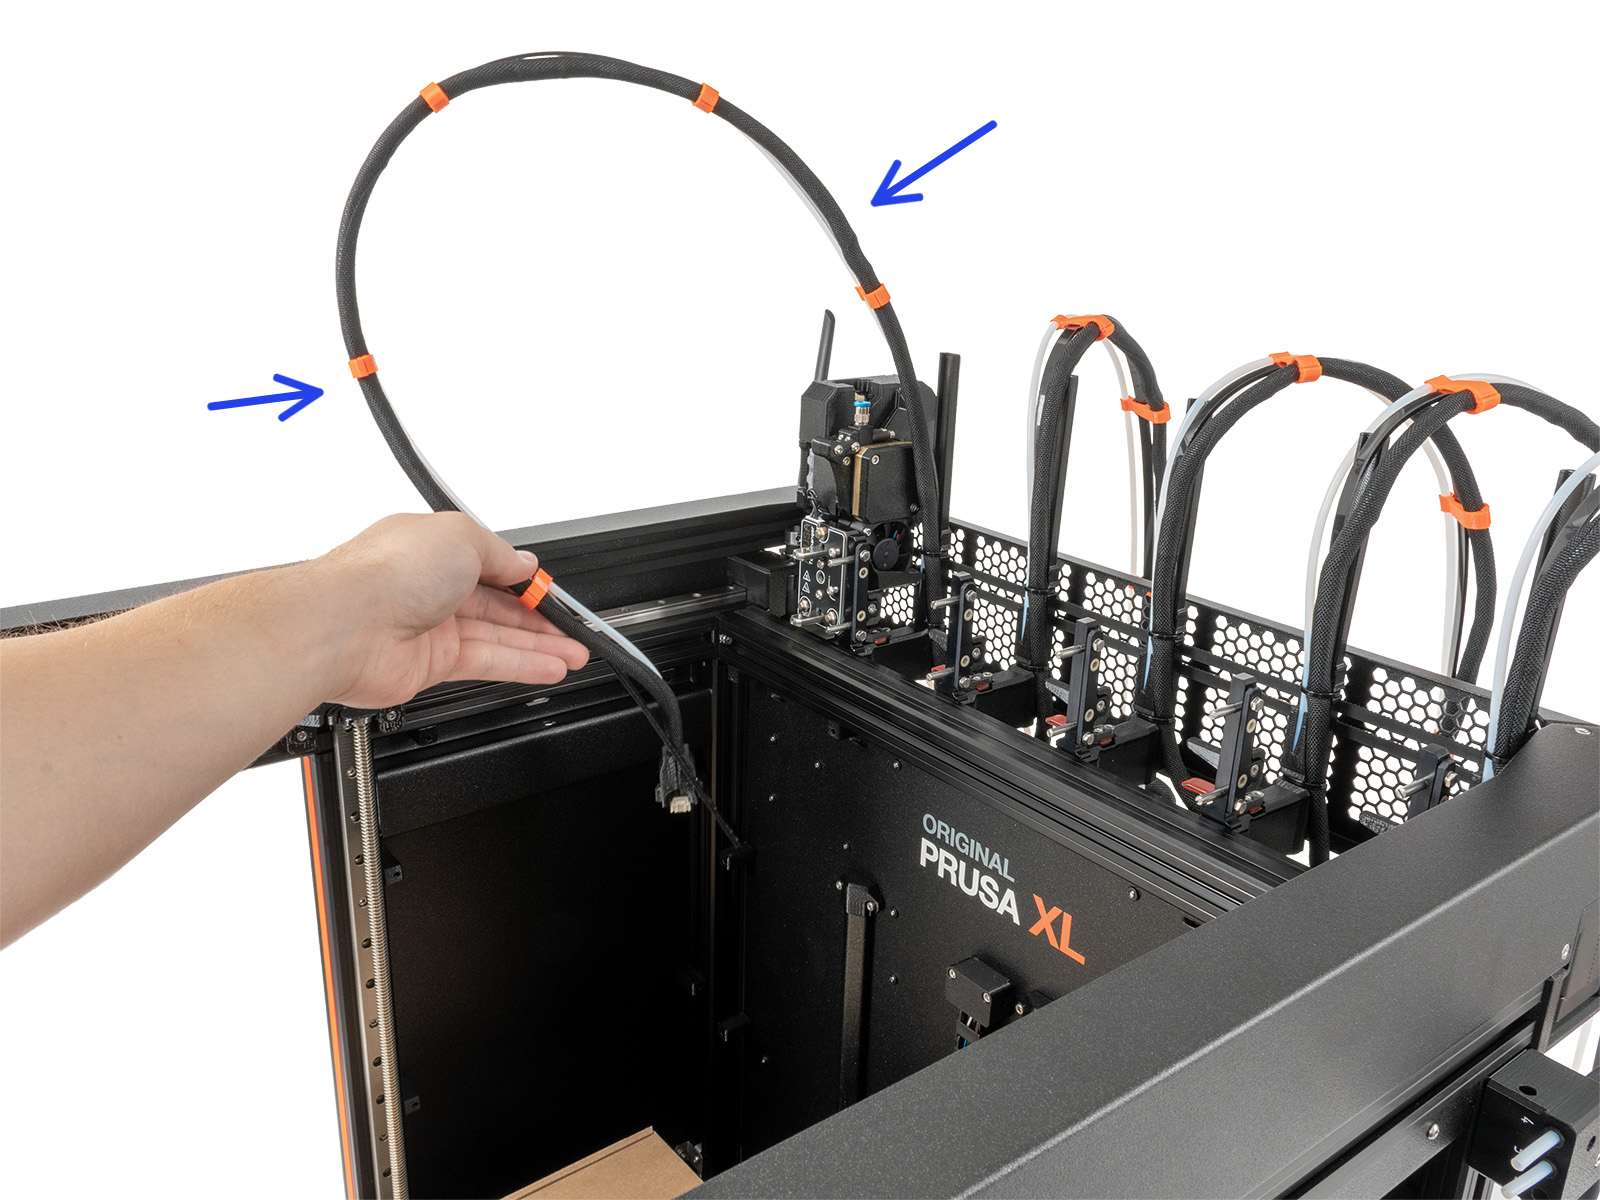 Nextruder cable bundle assembly